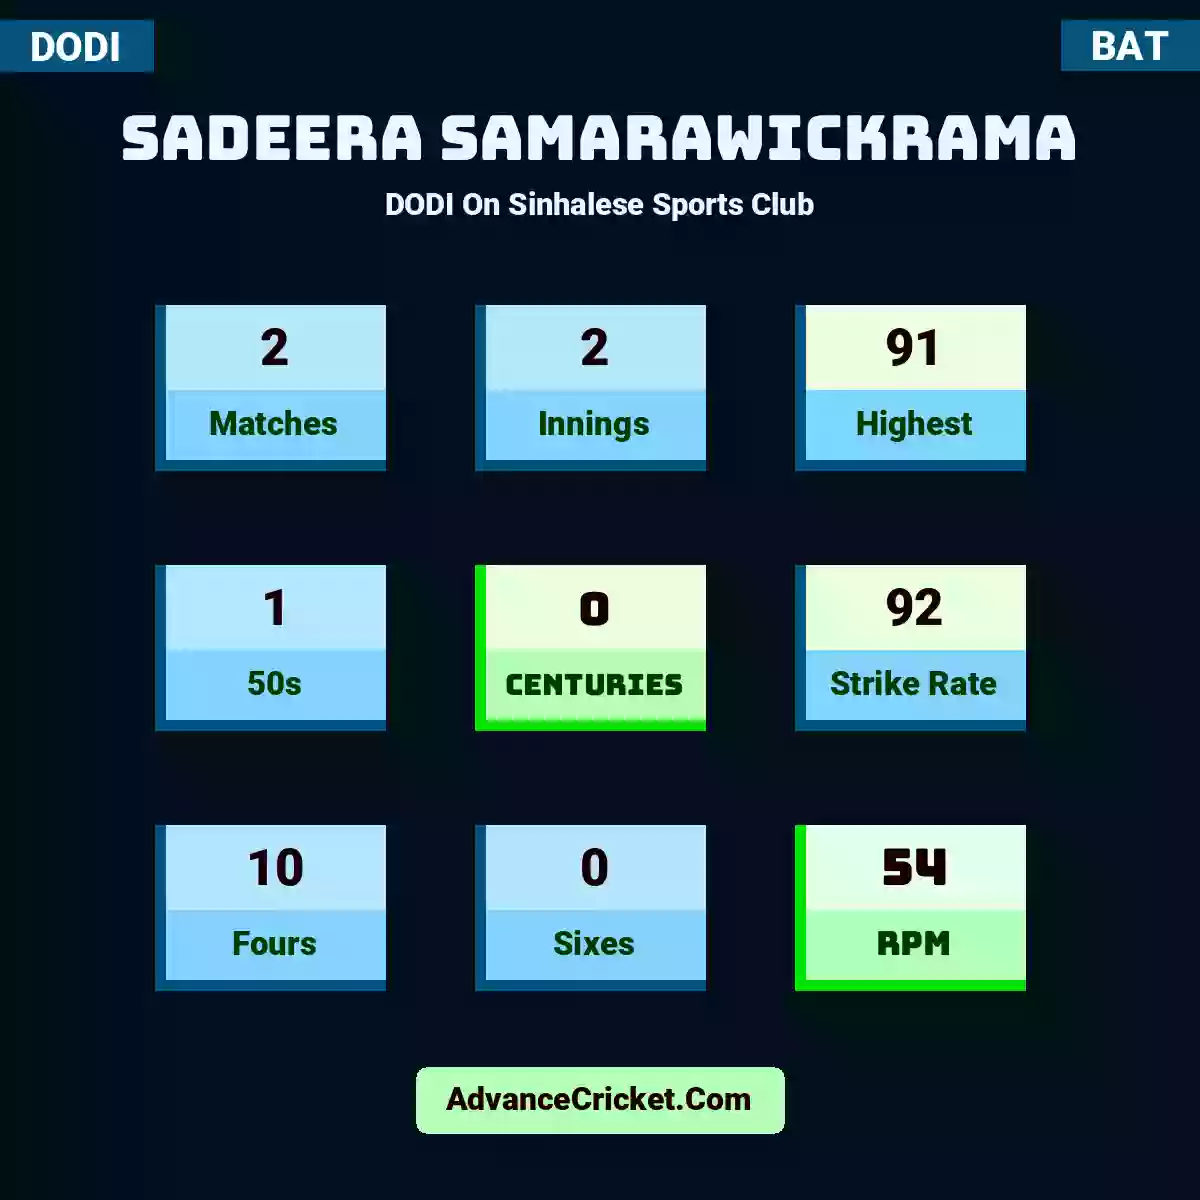 Sadeera Samarawickrama DODI  On Sinhalese Sports Club, Sadeera Samarawickrama played 2 matches, scored 91 runs as highest, 1 half-centuries, and 0 centuries, with a strike rate of 92. S.Samarawickrama hit 10 fours and 0 sixes, with an RPM of 54.